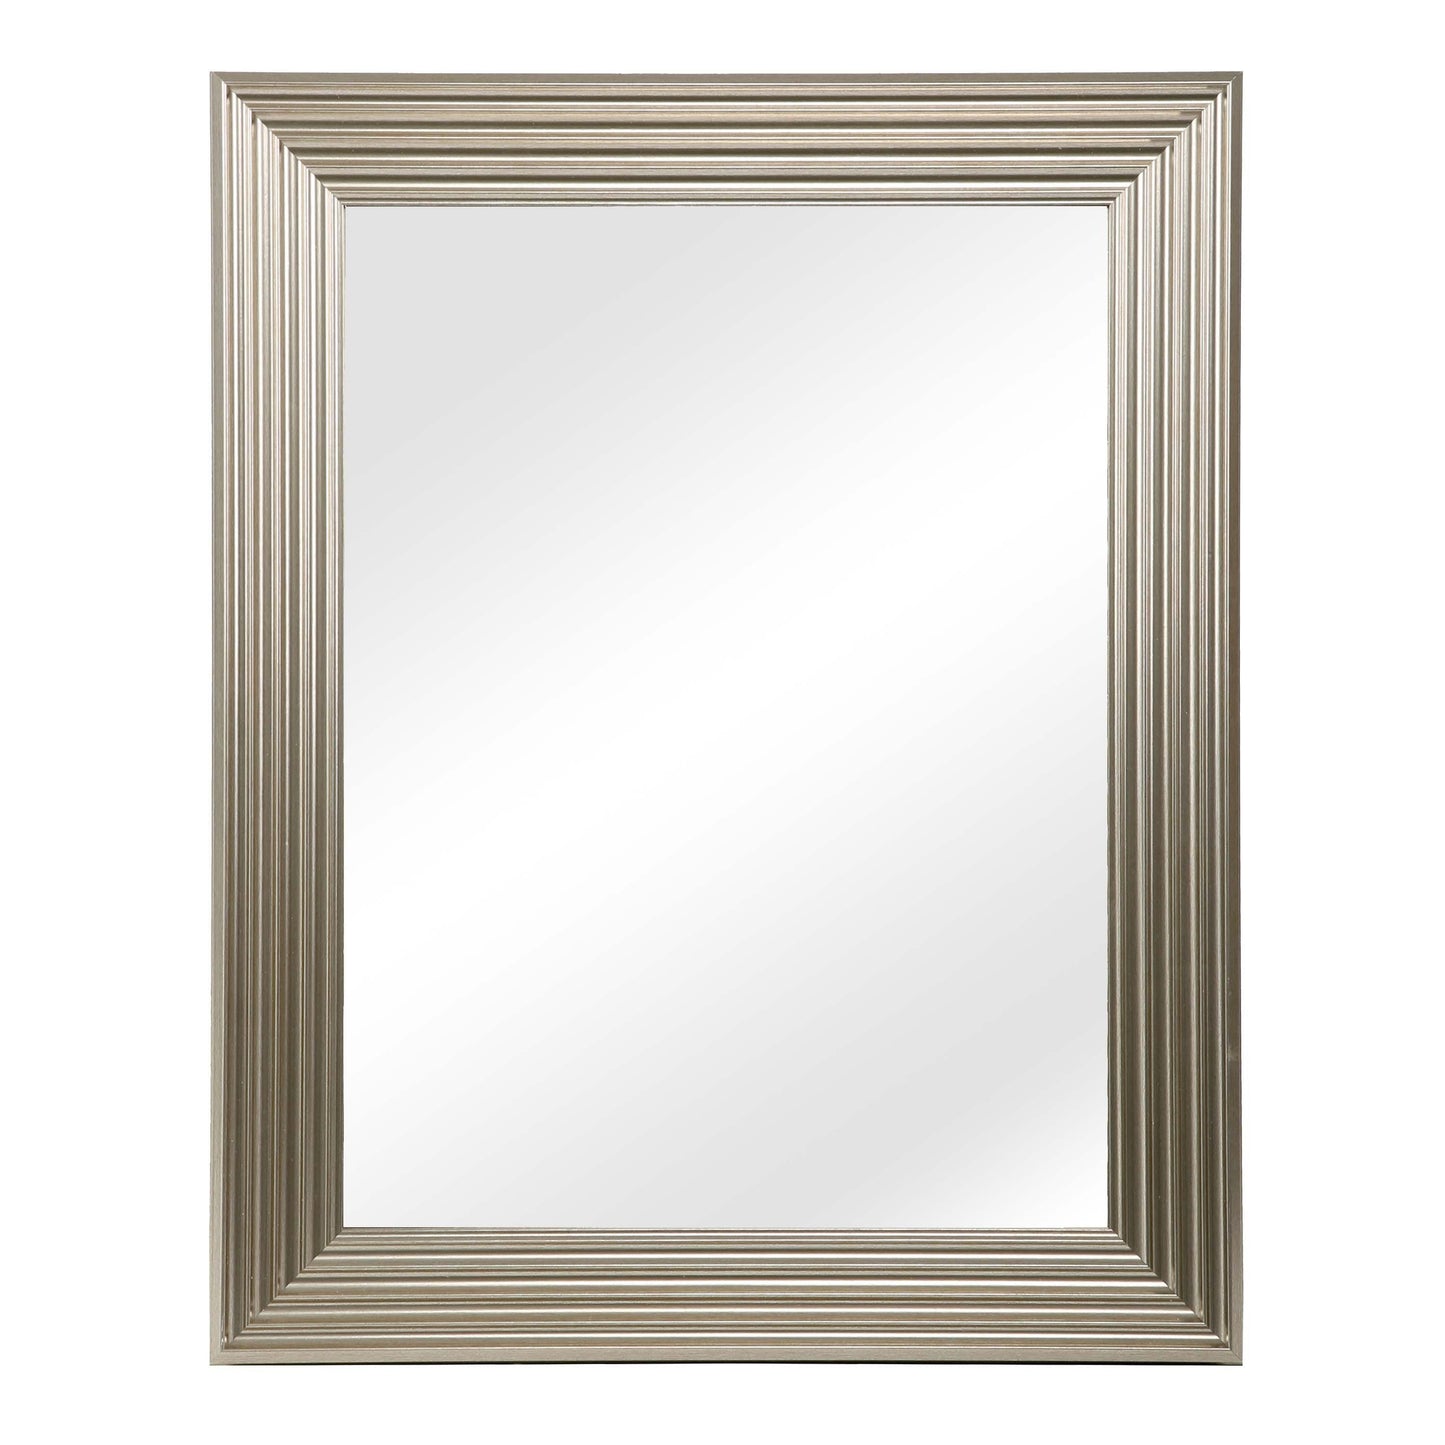 Medea mirror - rectangular - small - Laura James